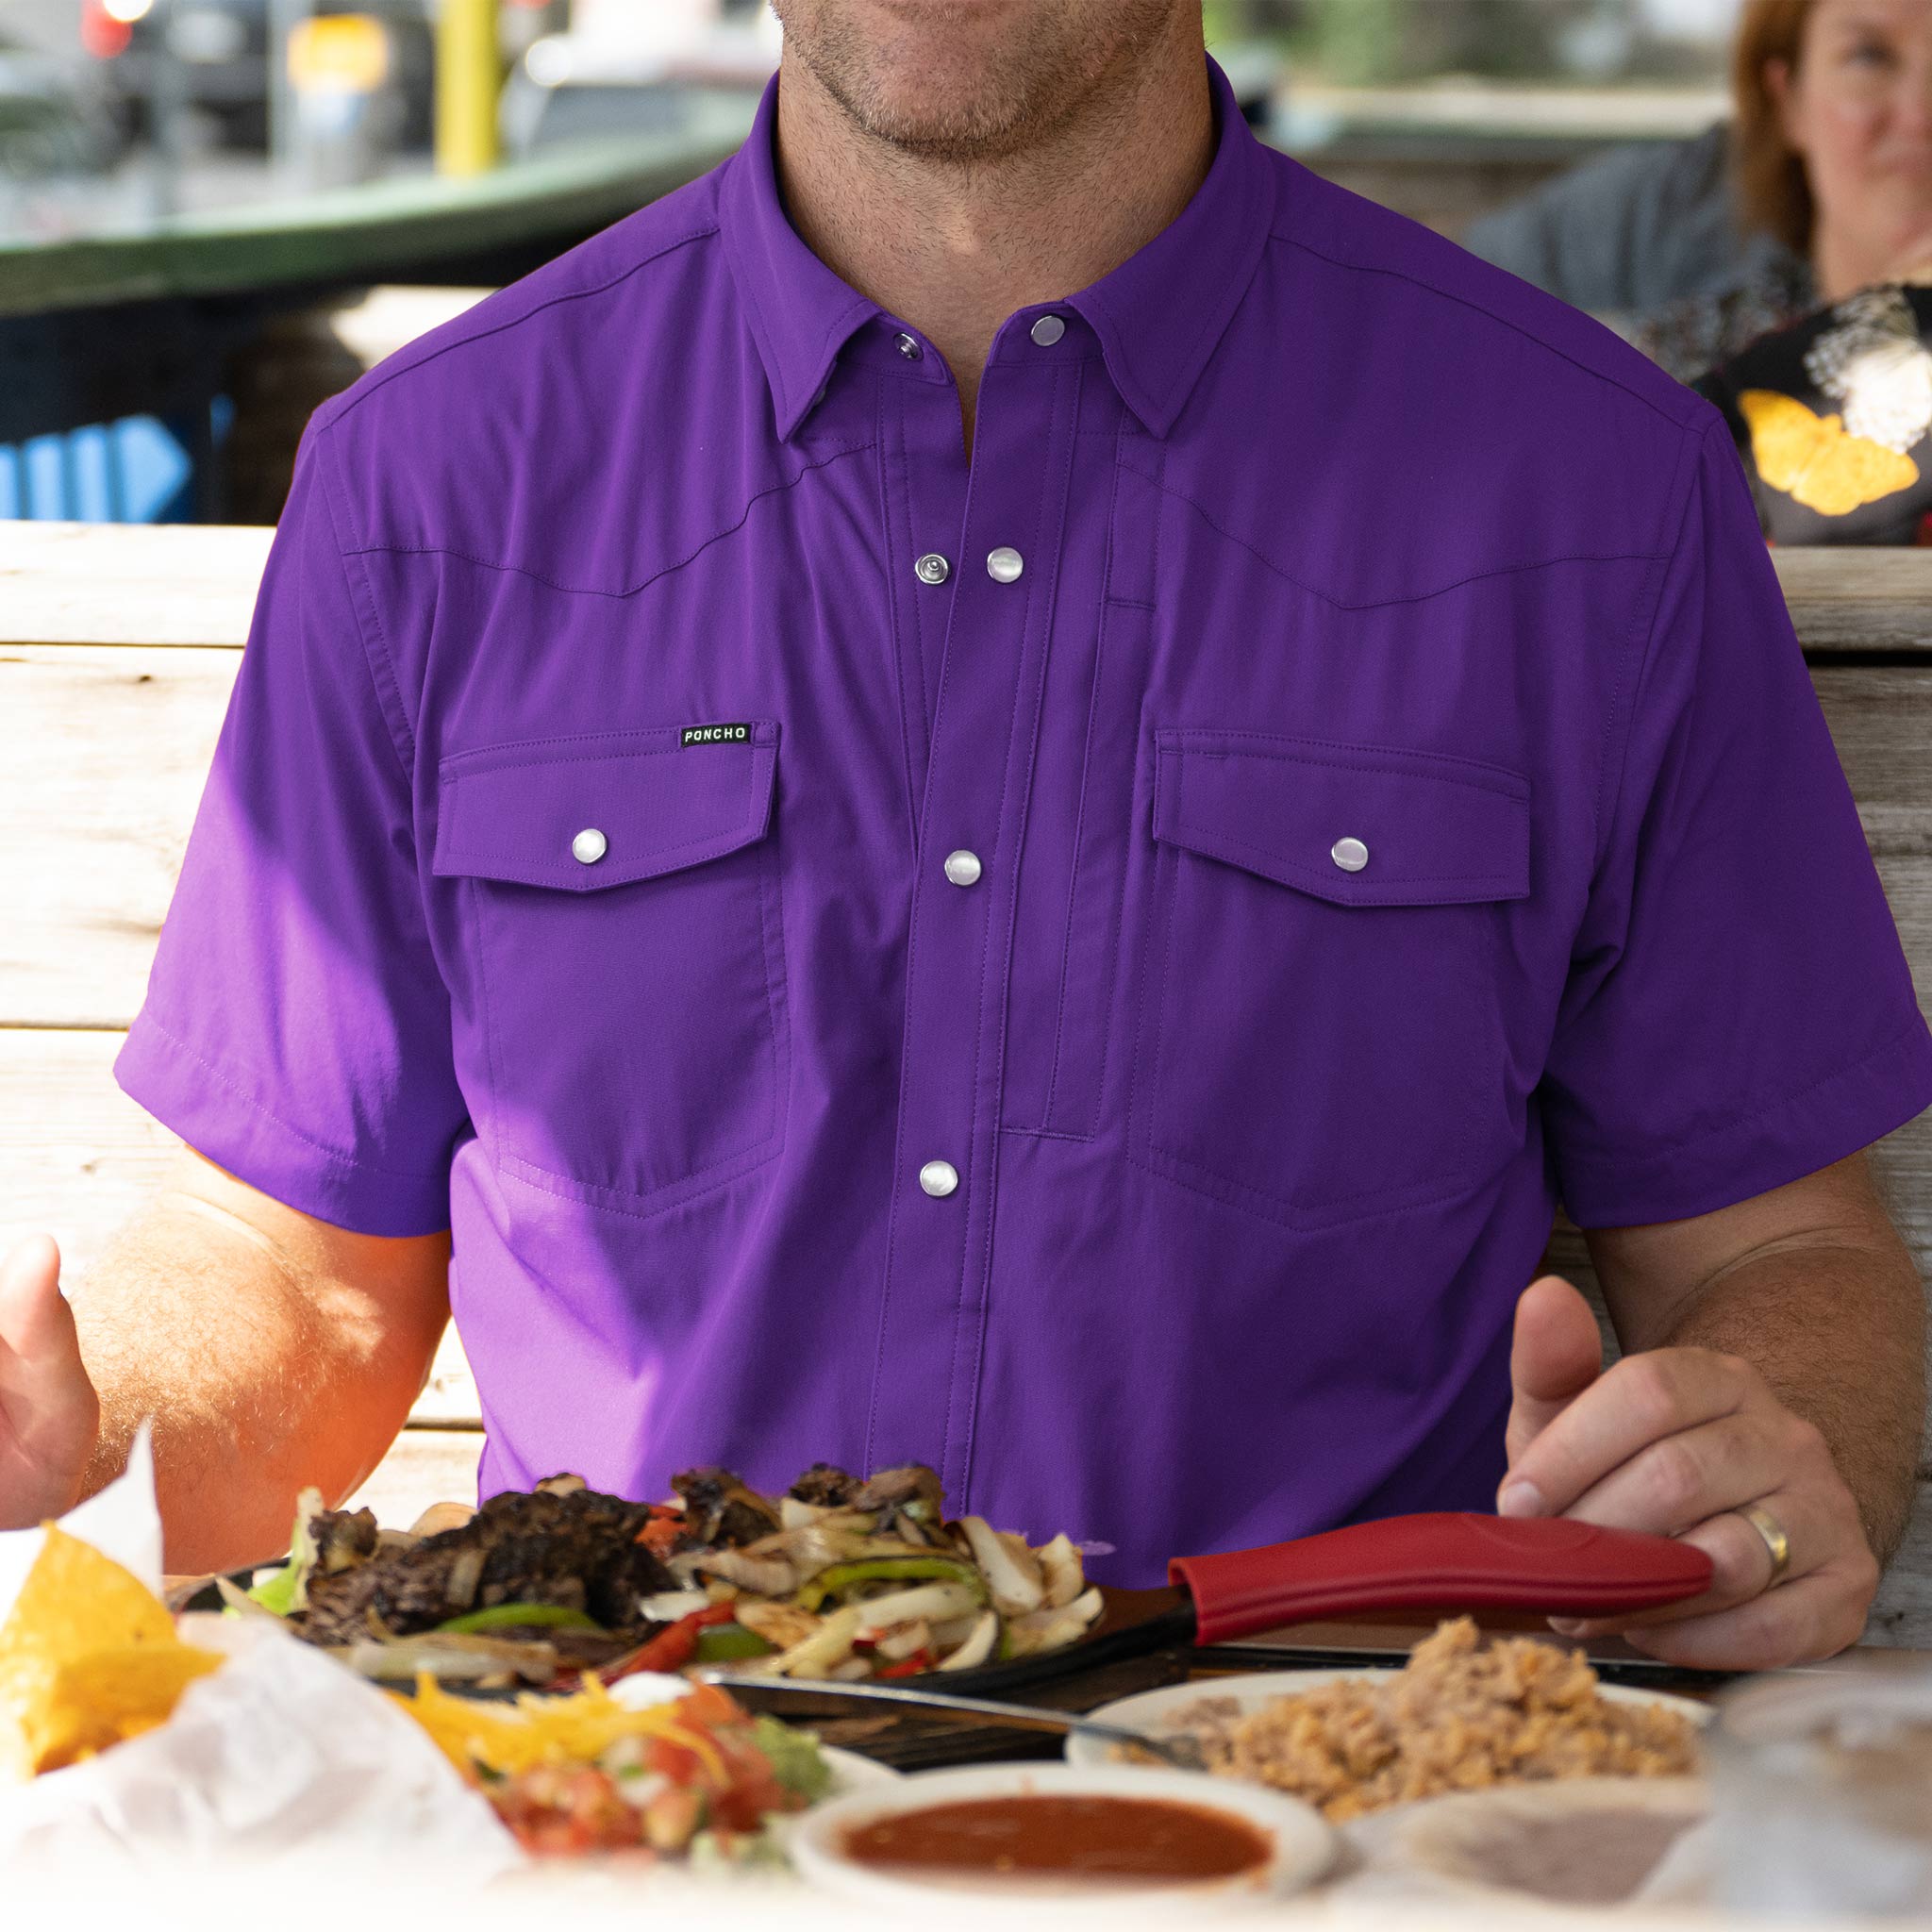 man wearing short sleeve purple shirt